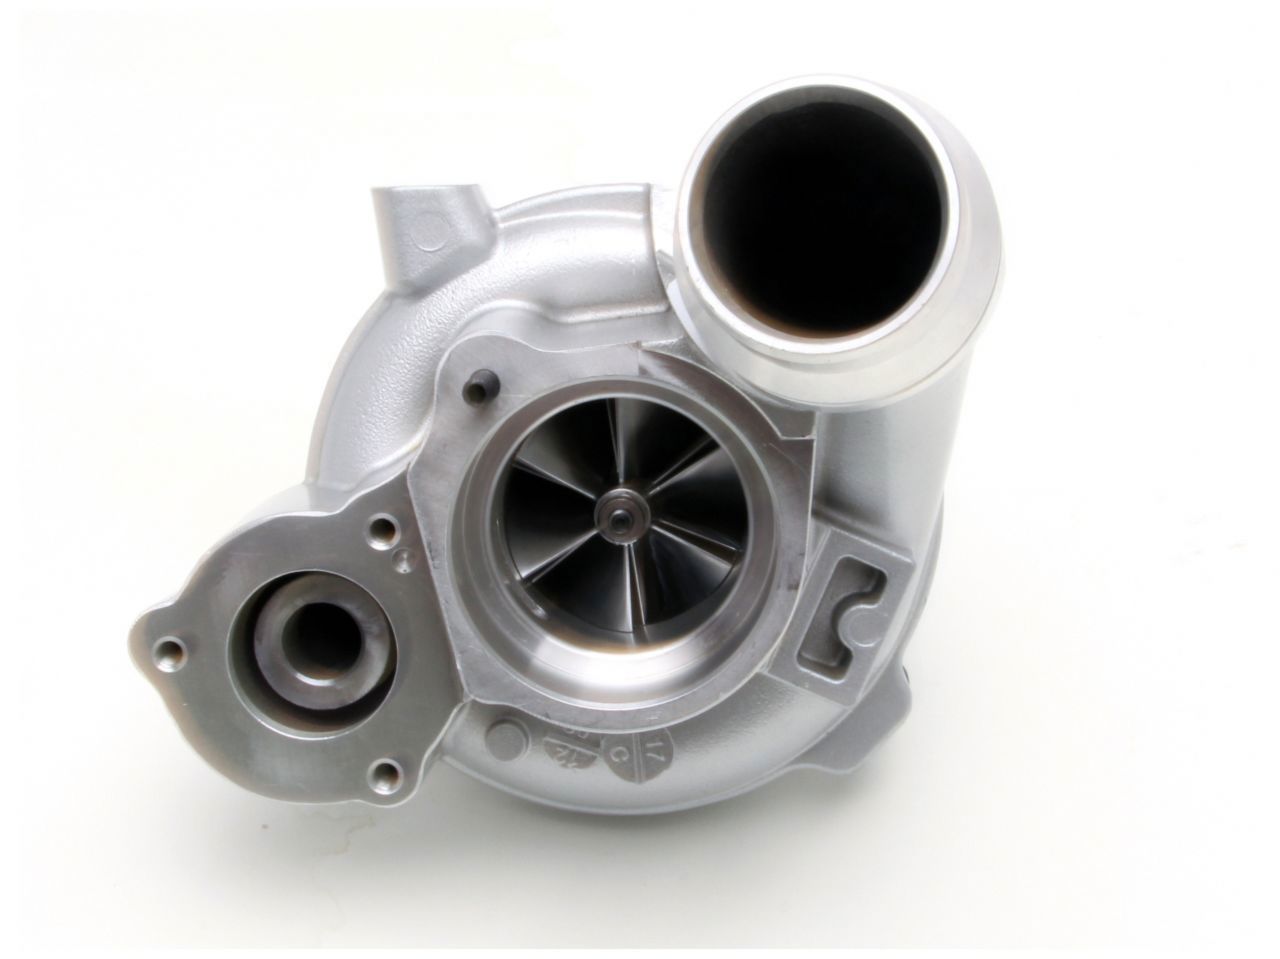 Dinan Big Turbo for the BMW N55 Engine (MWG)